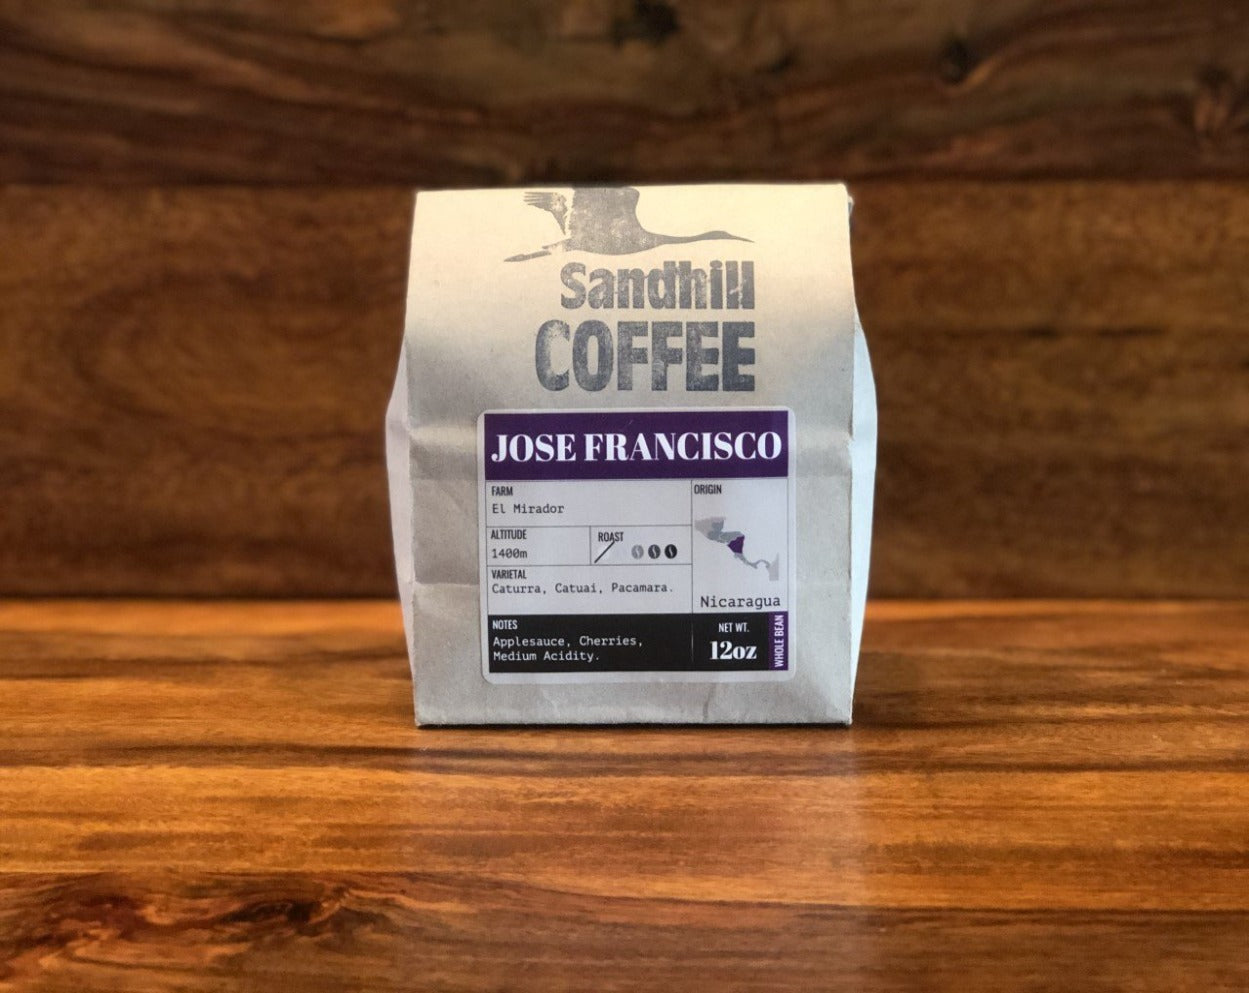 Jose Francisco - Light Roast - sandhillcoffee